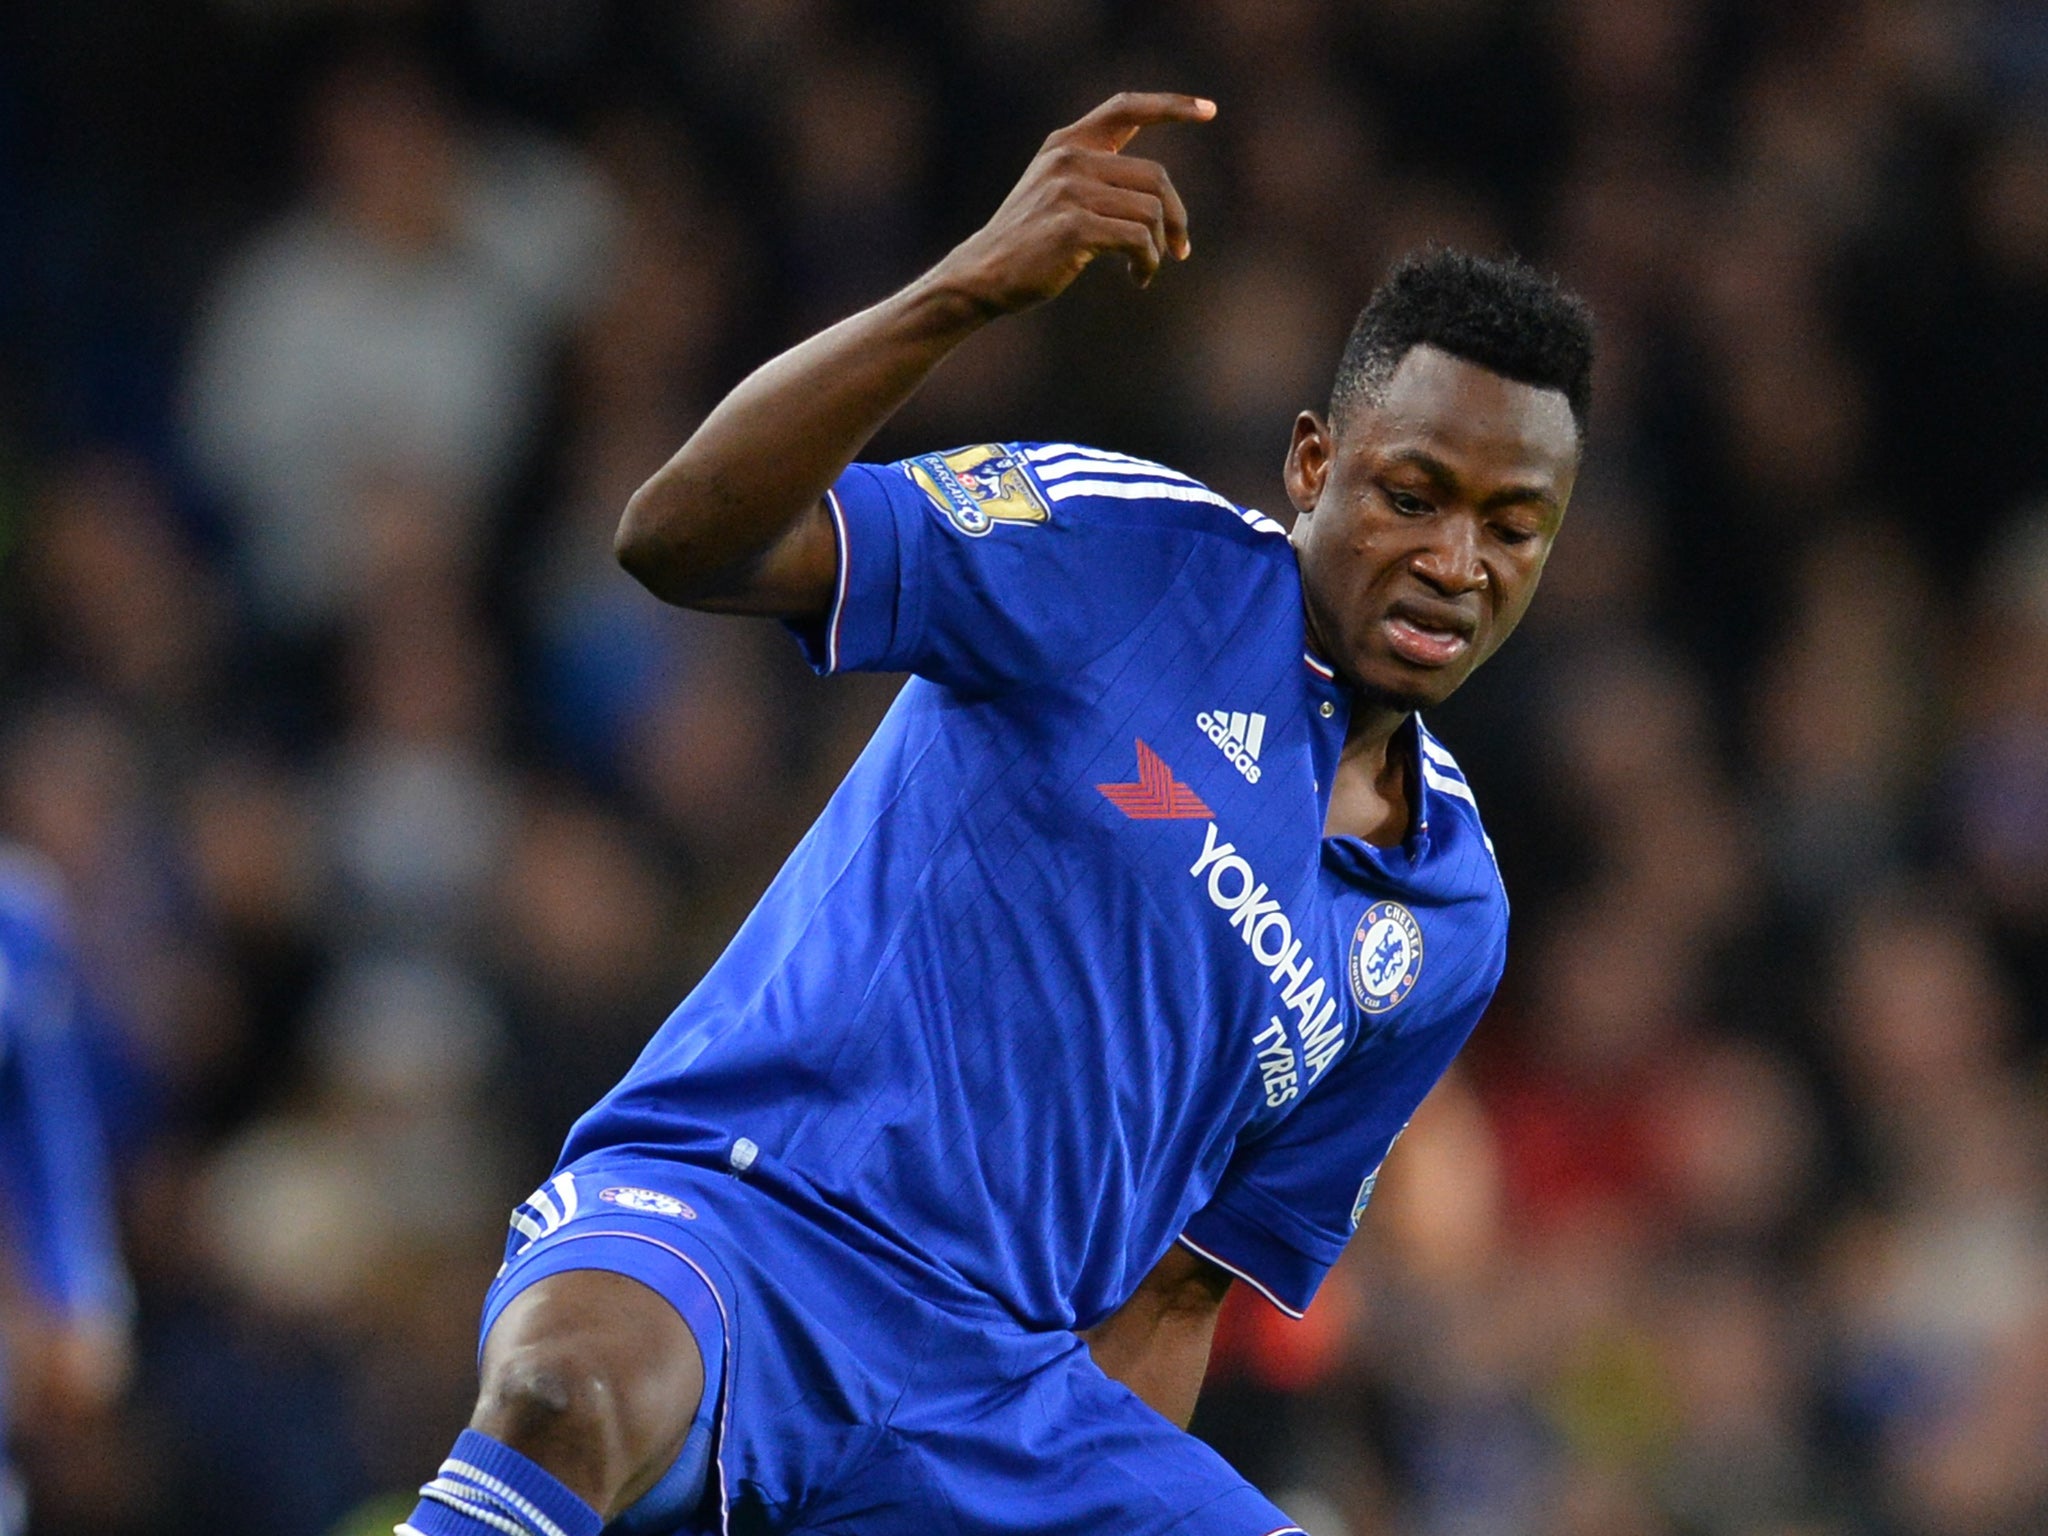 Chelsea full-back Baba Rahman